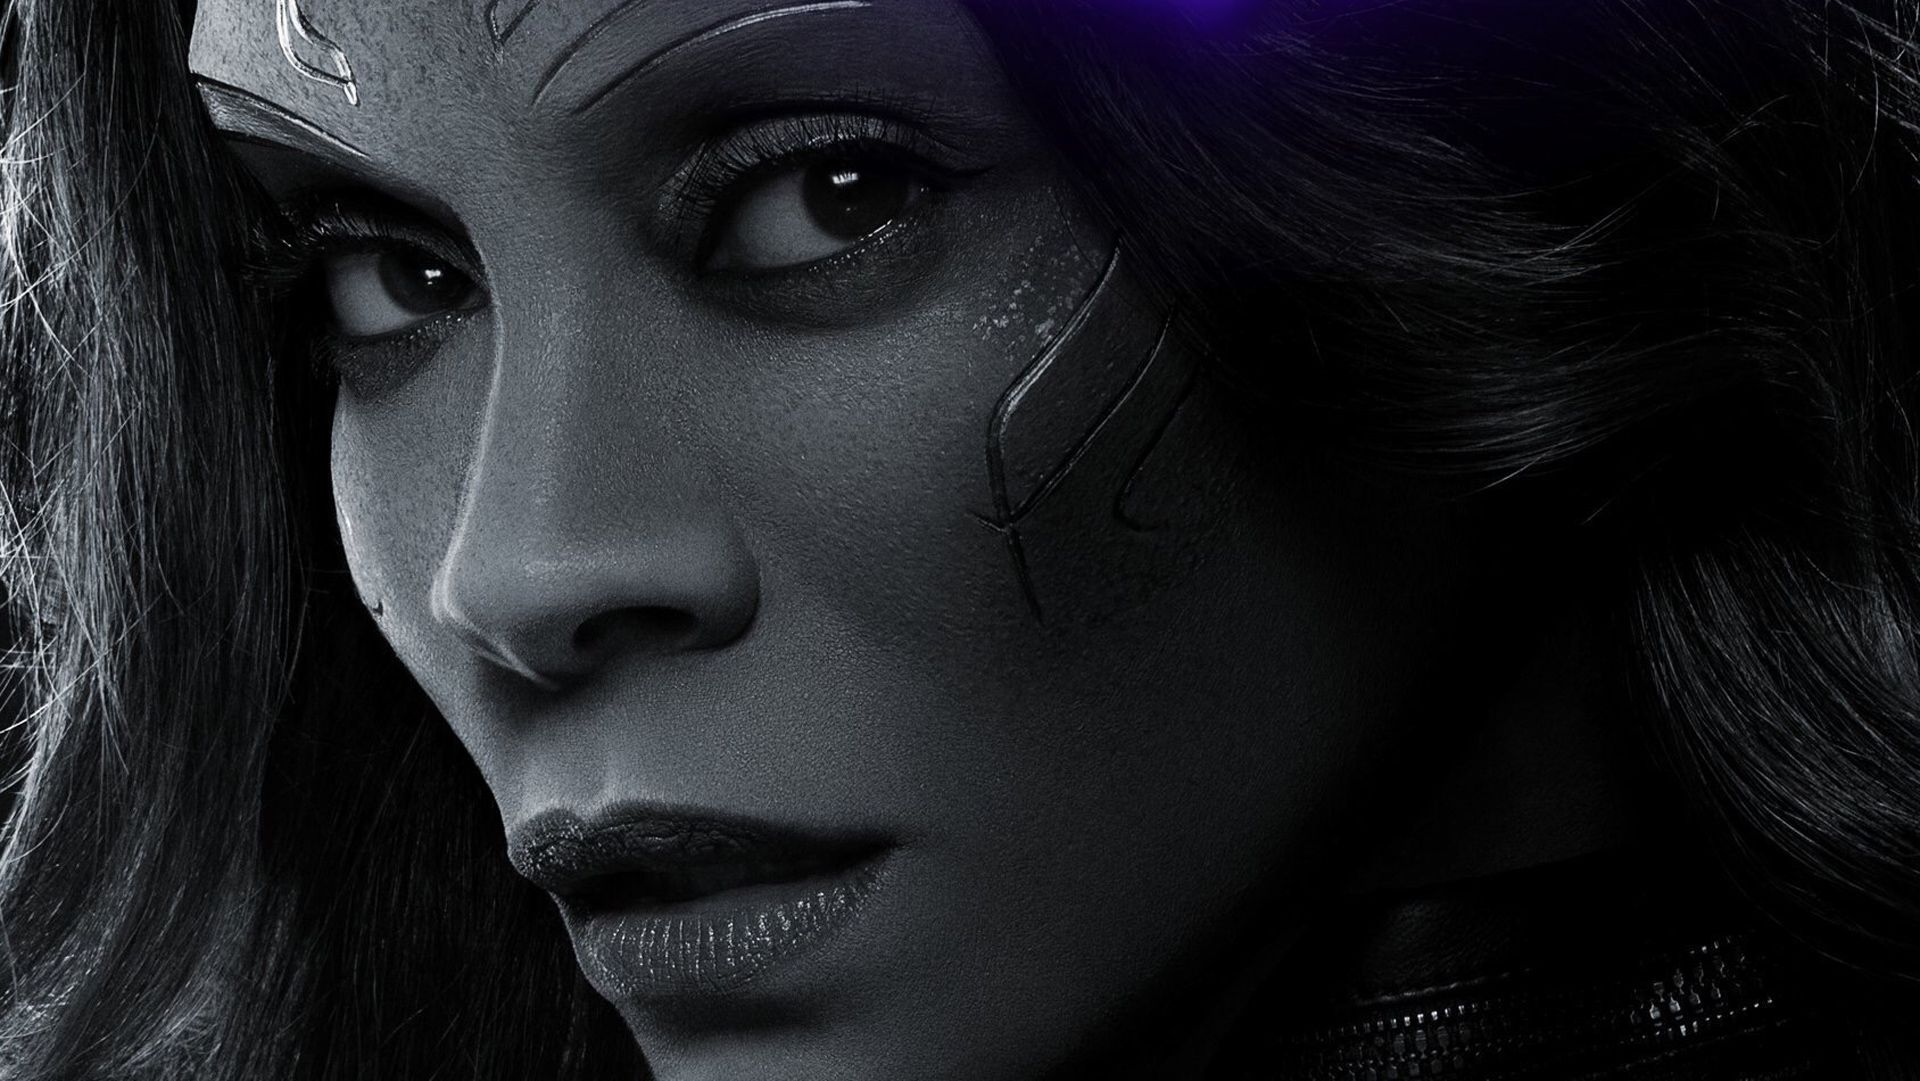 Gamora Avengers Endgame 2019 Poster, HD Movies, 4k Wallpaper